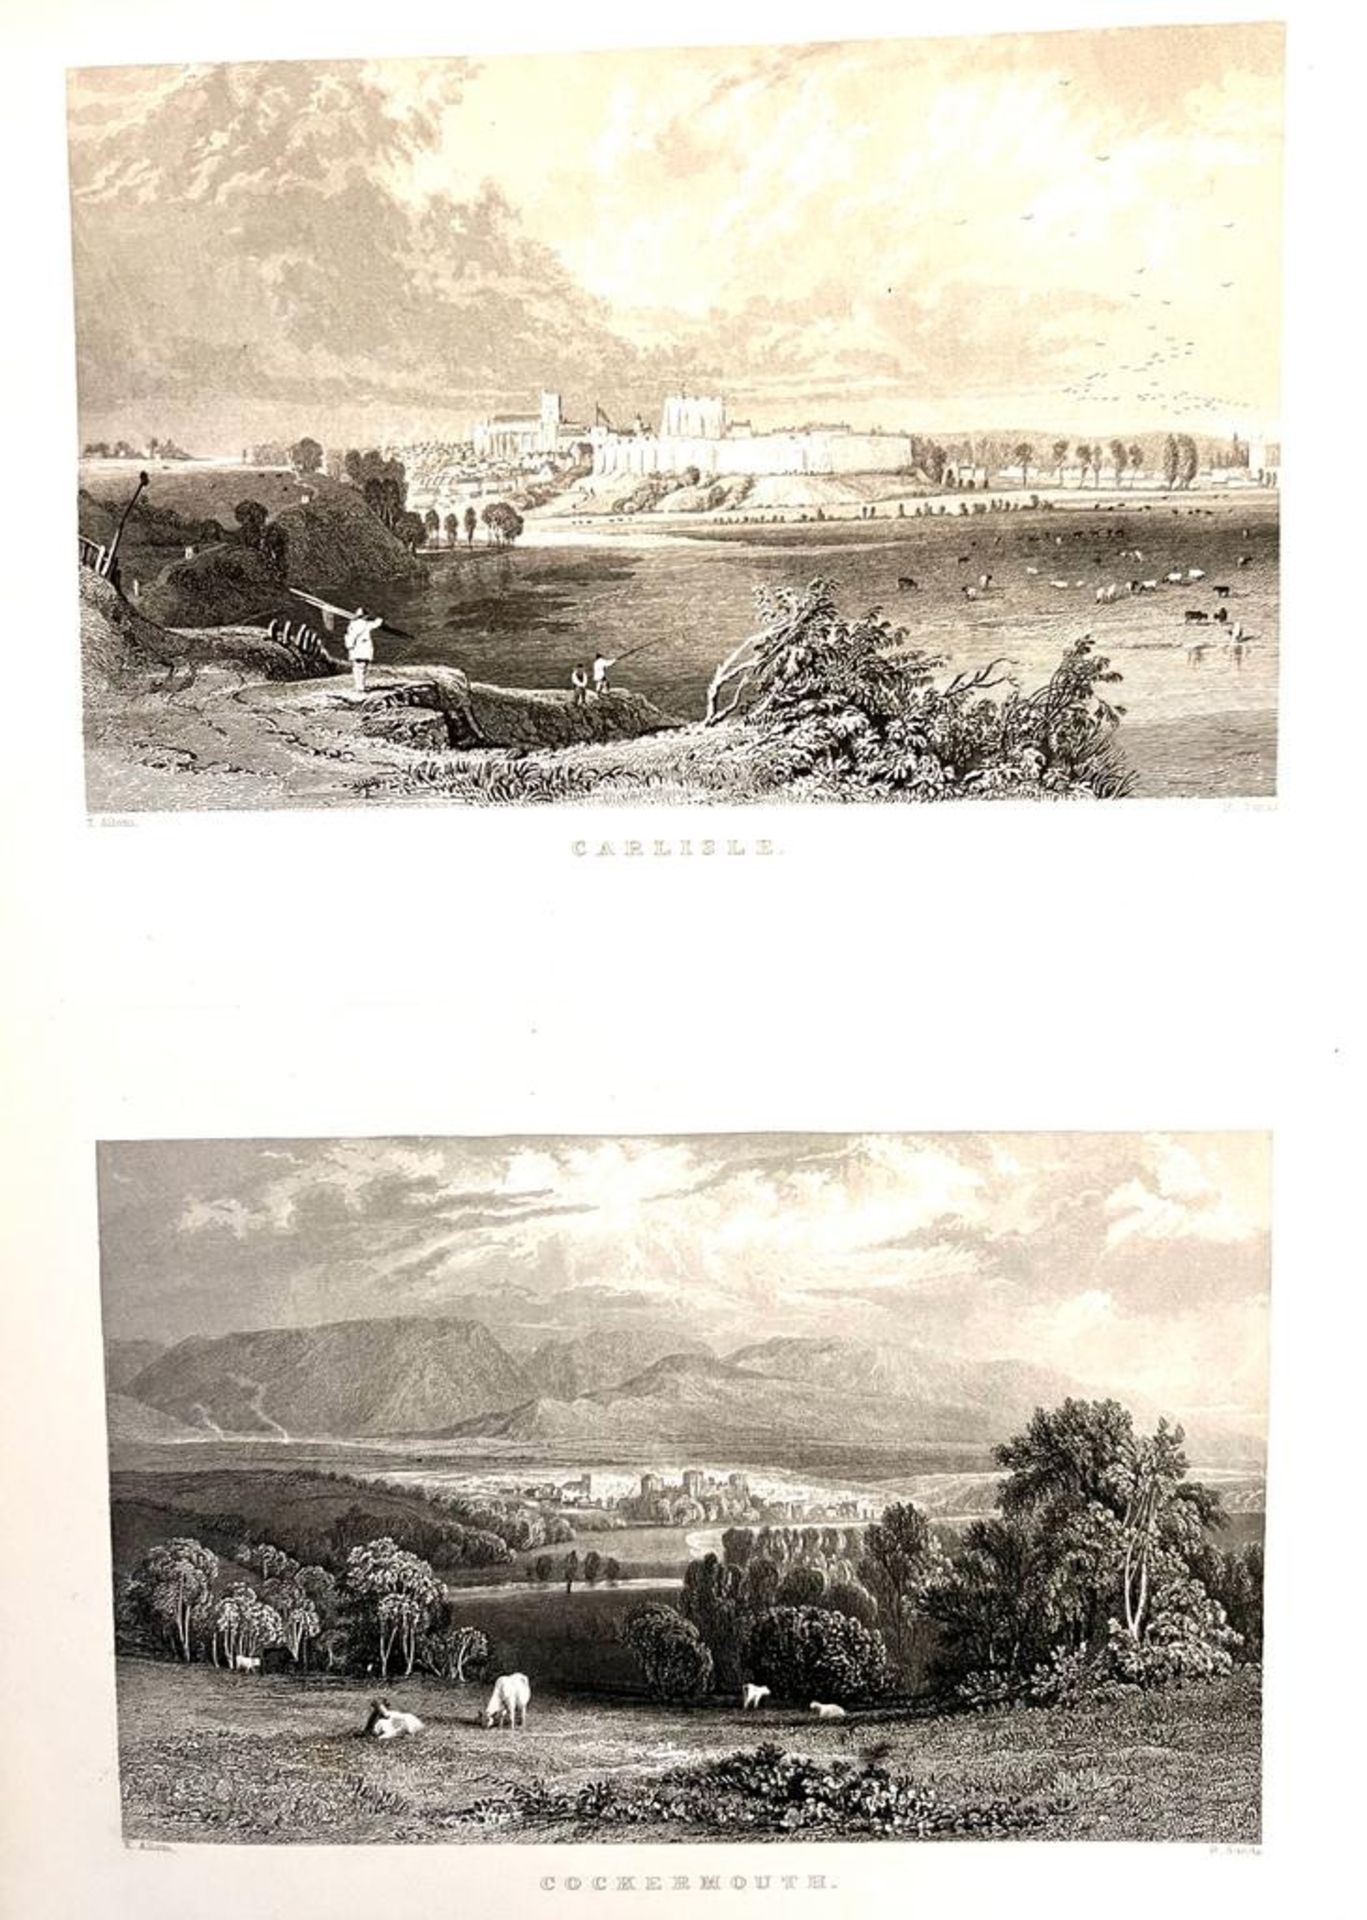 ALLOM, THOMAS, WESTMORLAND, CUMBERLAND, DURHAM, ILLUSTRATED 1832, THREE VOLUMES, CLOTH BACKS - Image 5 of 5